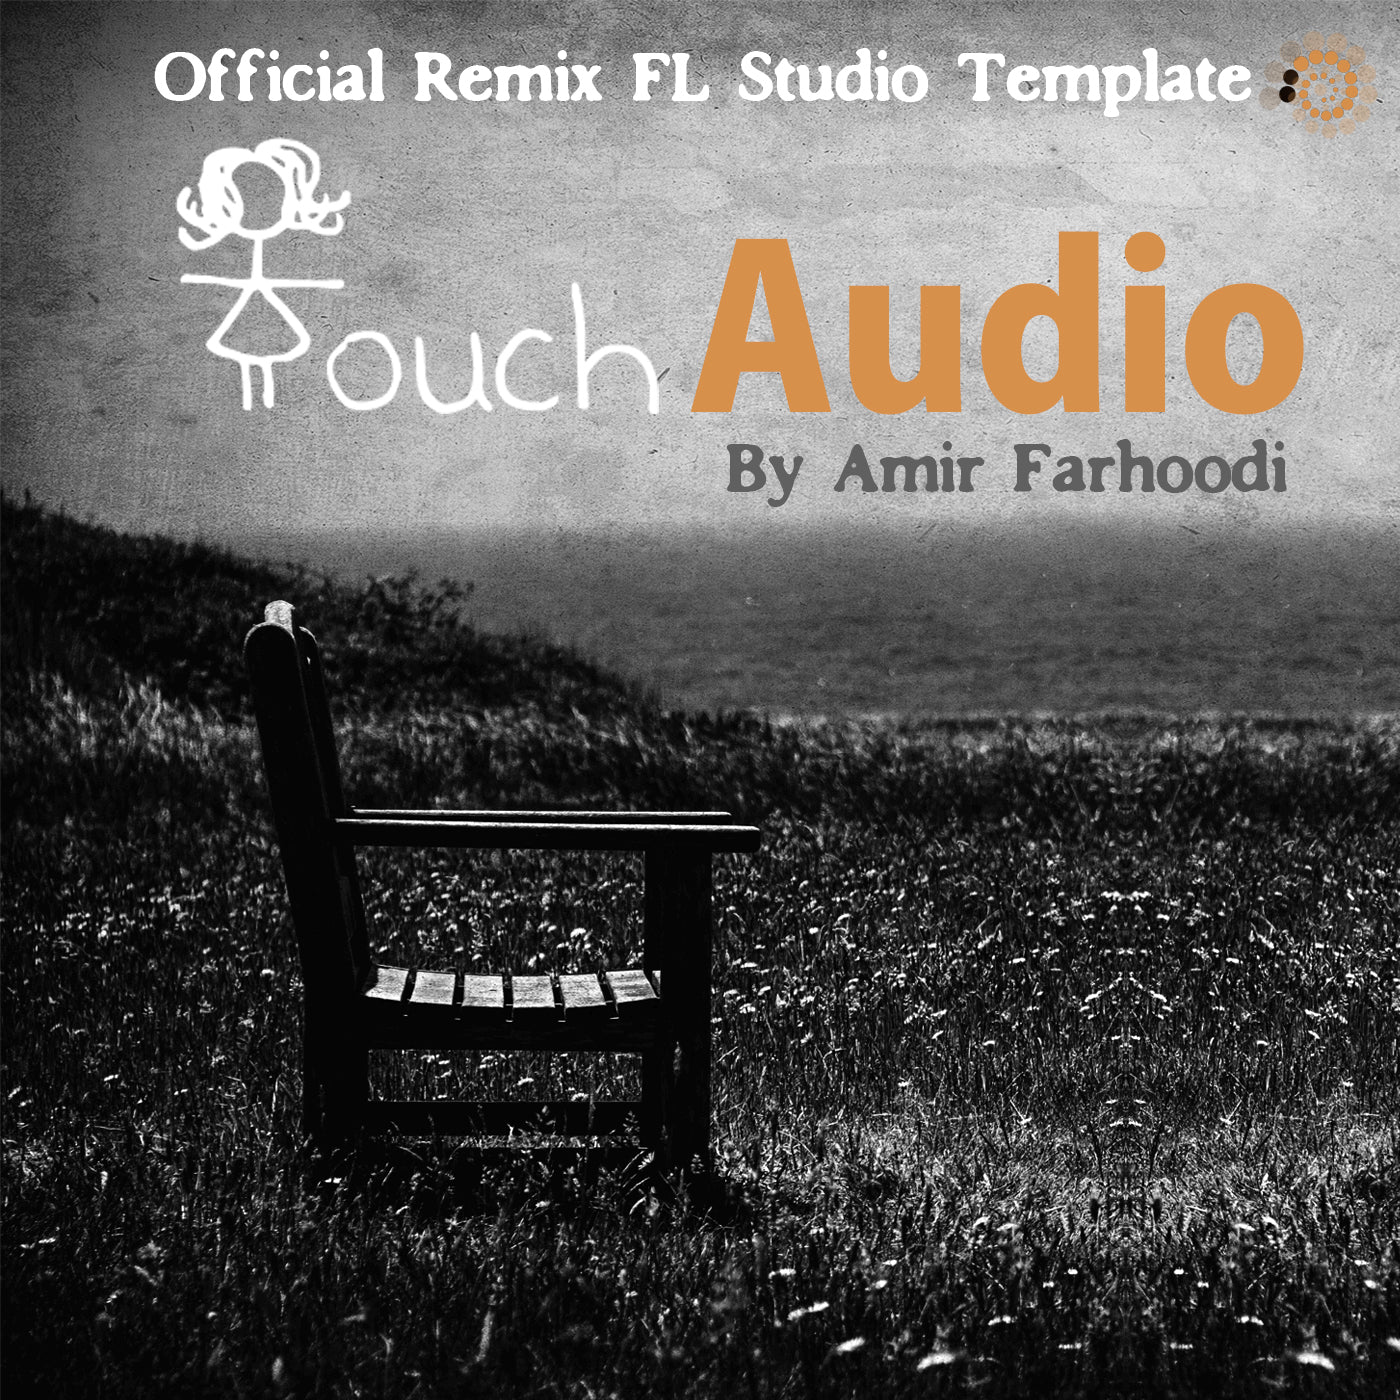 Official ASOT Trance Remix FL Studio Template by Amir Farhoodi